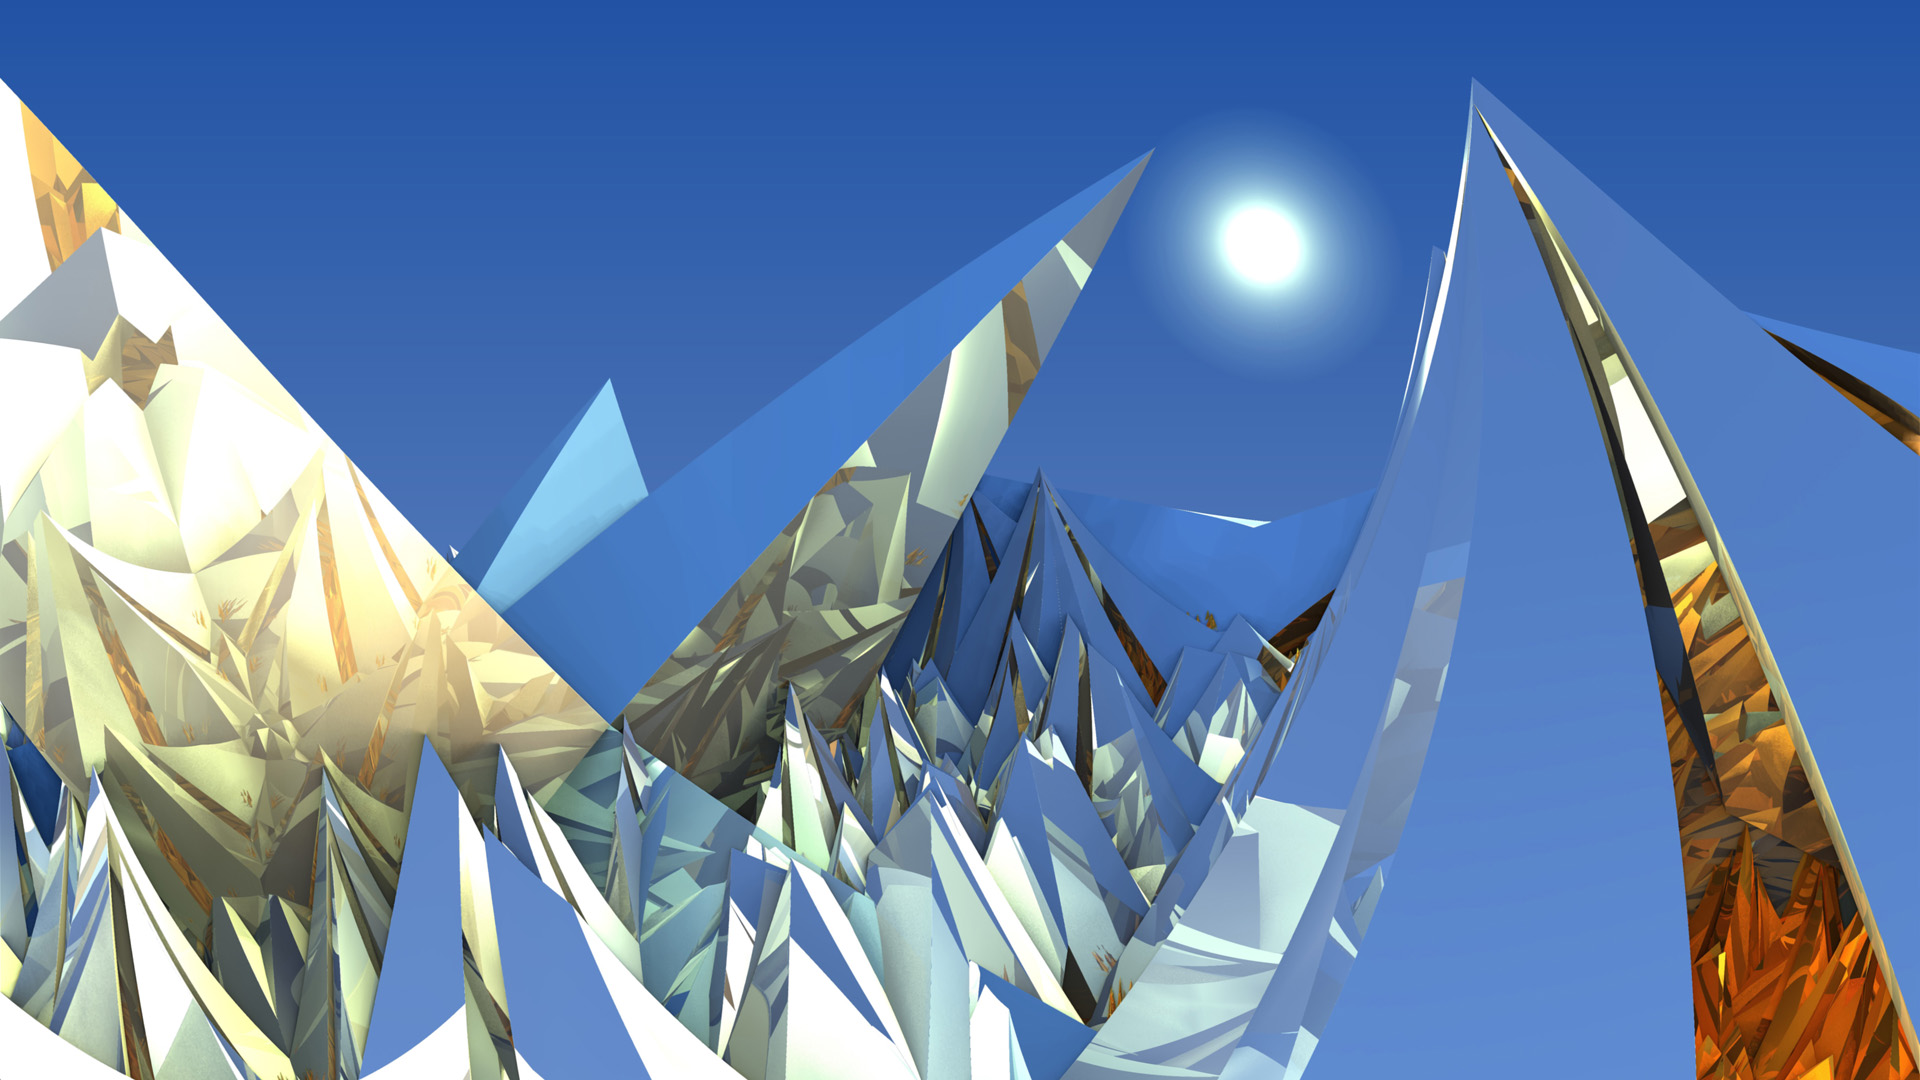 3D Abstract Artistic Digital Art Fractal Mandelbulb 3D Spikes Blue White Reflection CGi Geometry 1920x1080